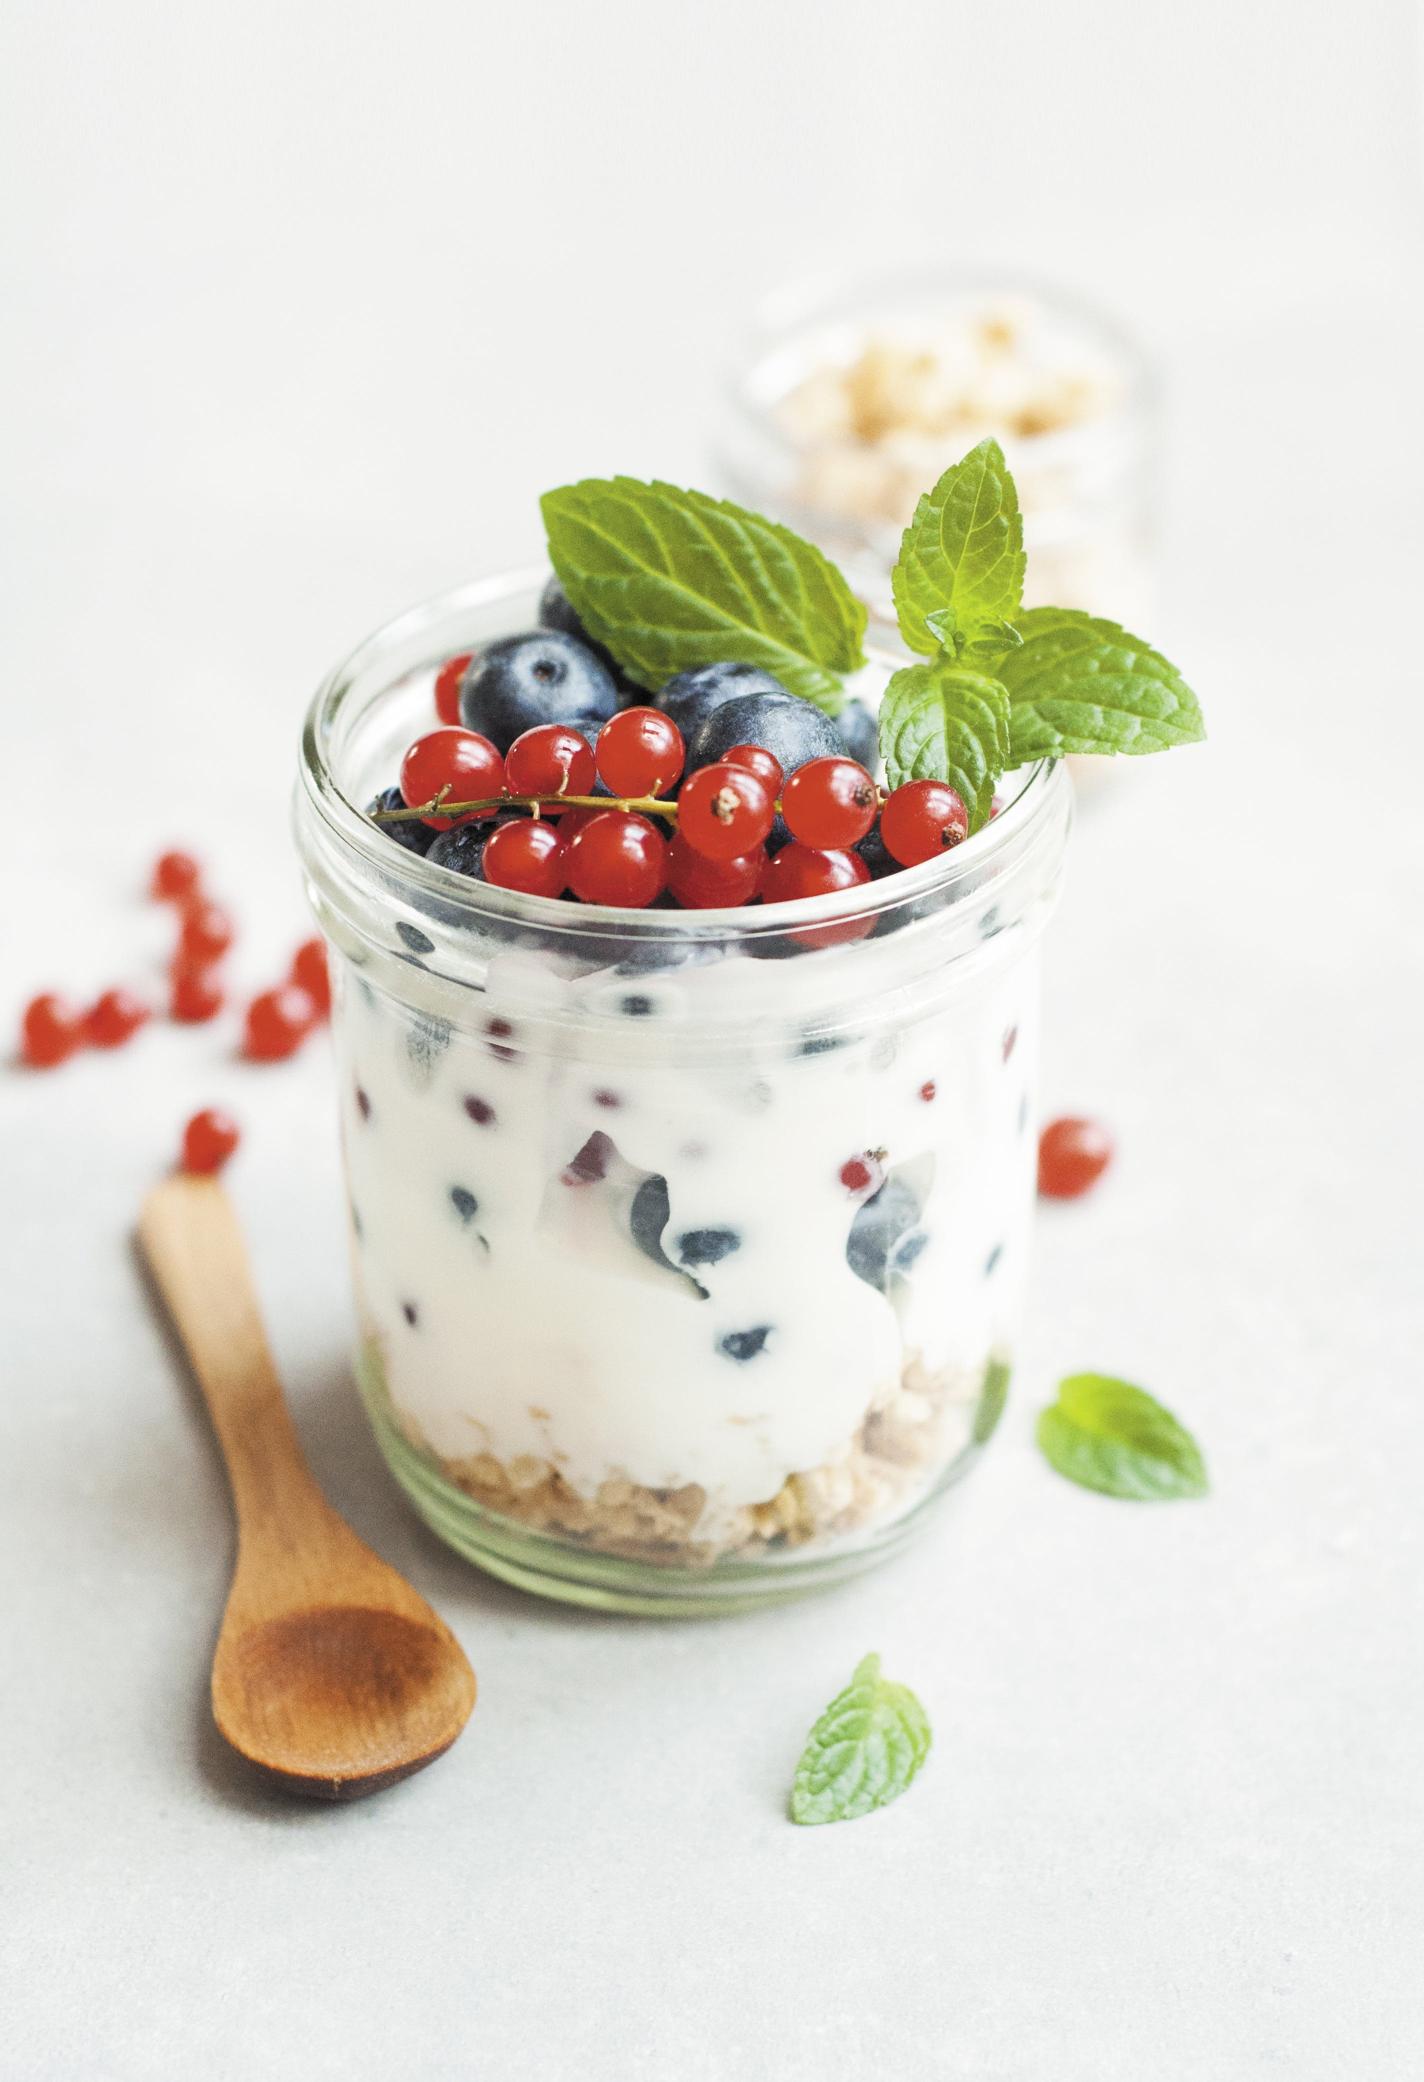 Introduzione ai benefici degli yogurt probiotici